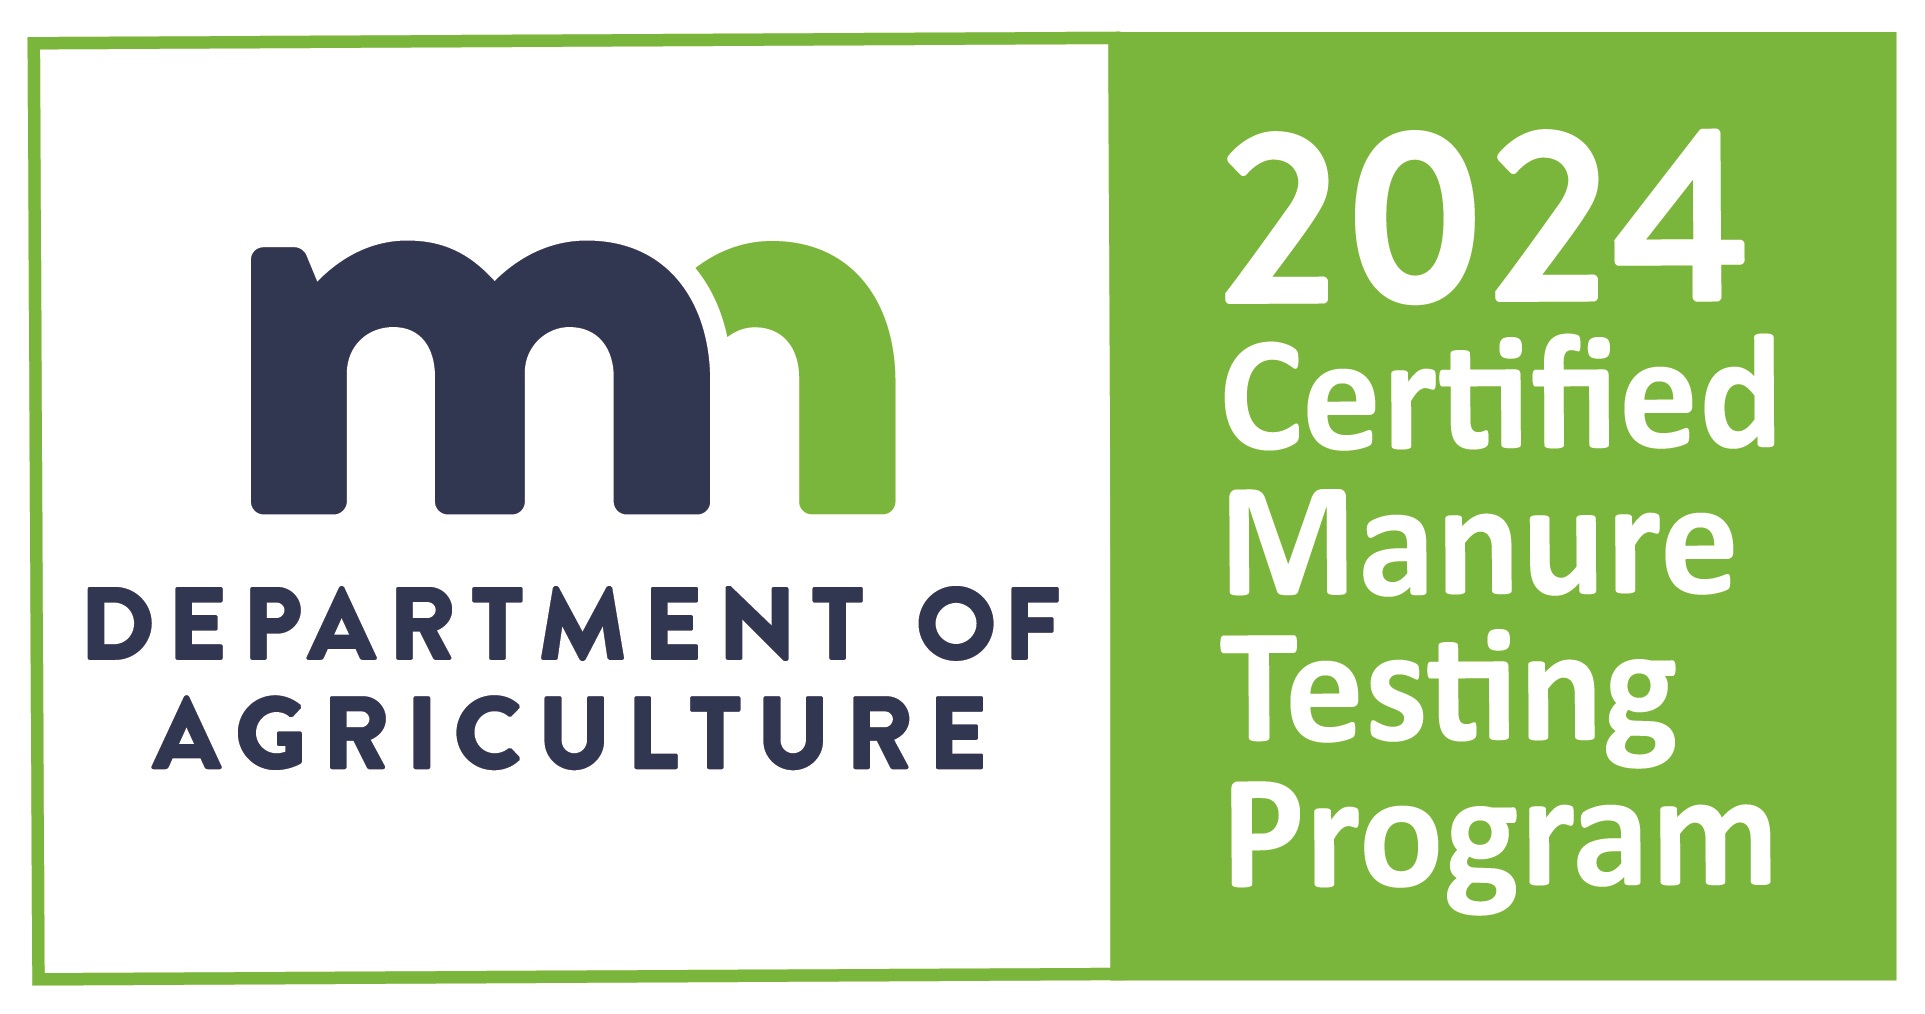 Minnesota Department of Agriculture 2024 Certified Manure Testing Program Logo